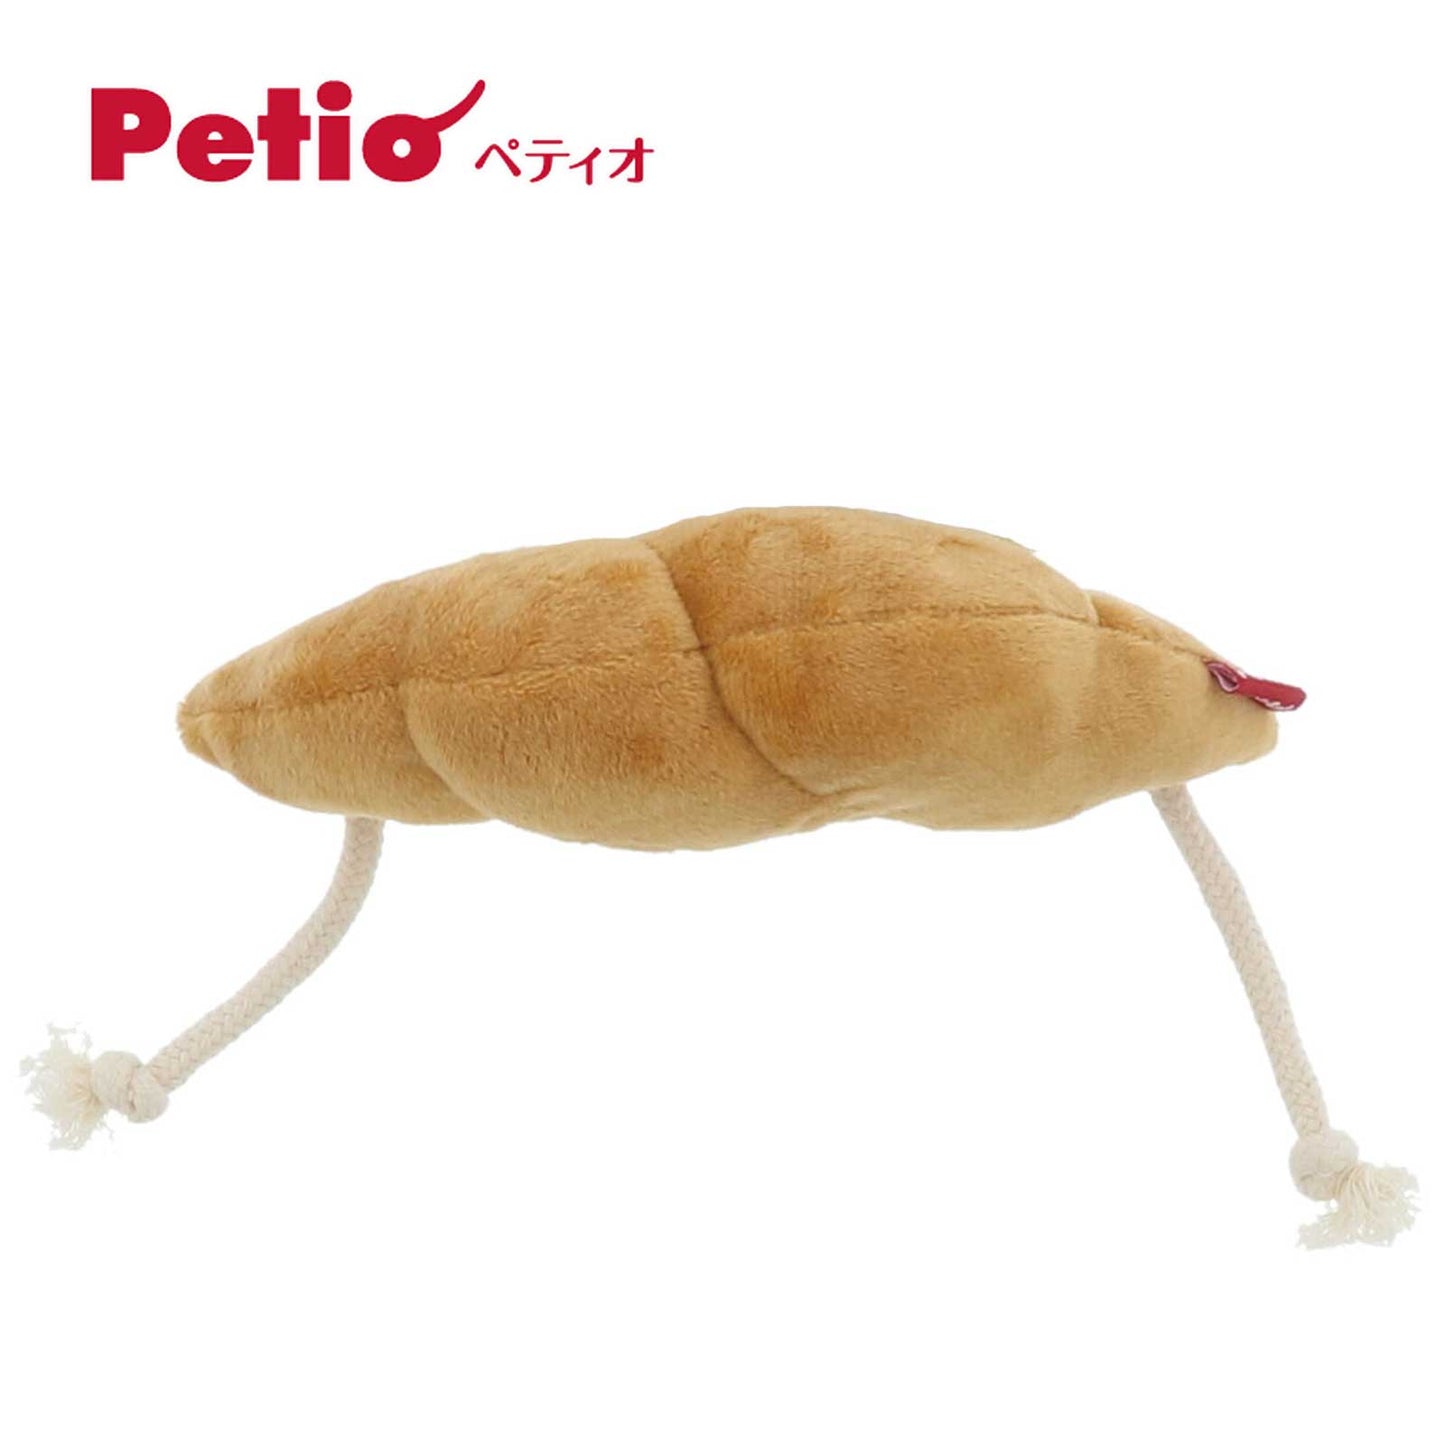 Petio Bakery Series Croissant Plush Squeaky Dog Toy